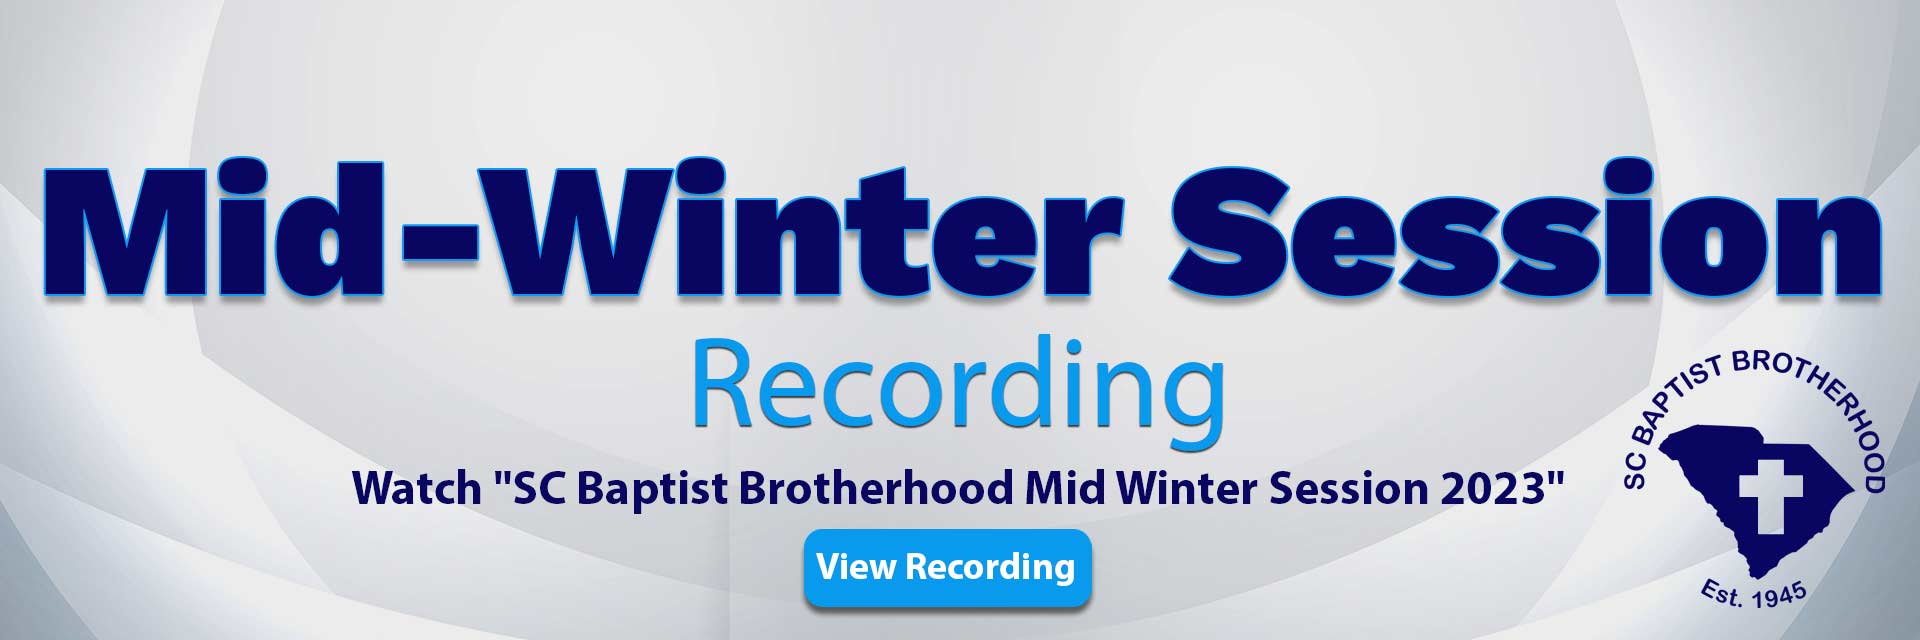 2023 Mid-Winter Session Recording